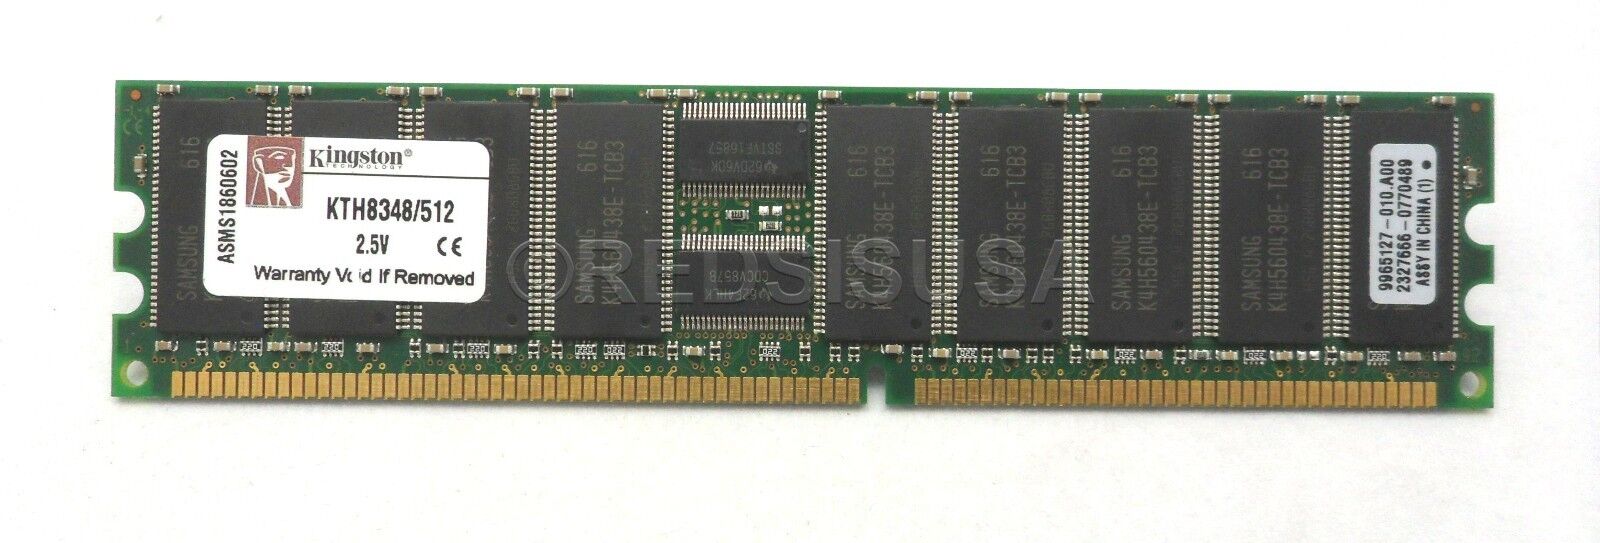 Kingston 512MB DDR PC-2700 Reg ECC 184 Pin Server RAM Memory KTH8348/2512